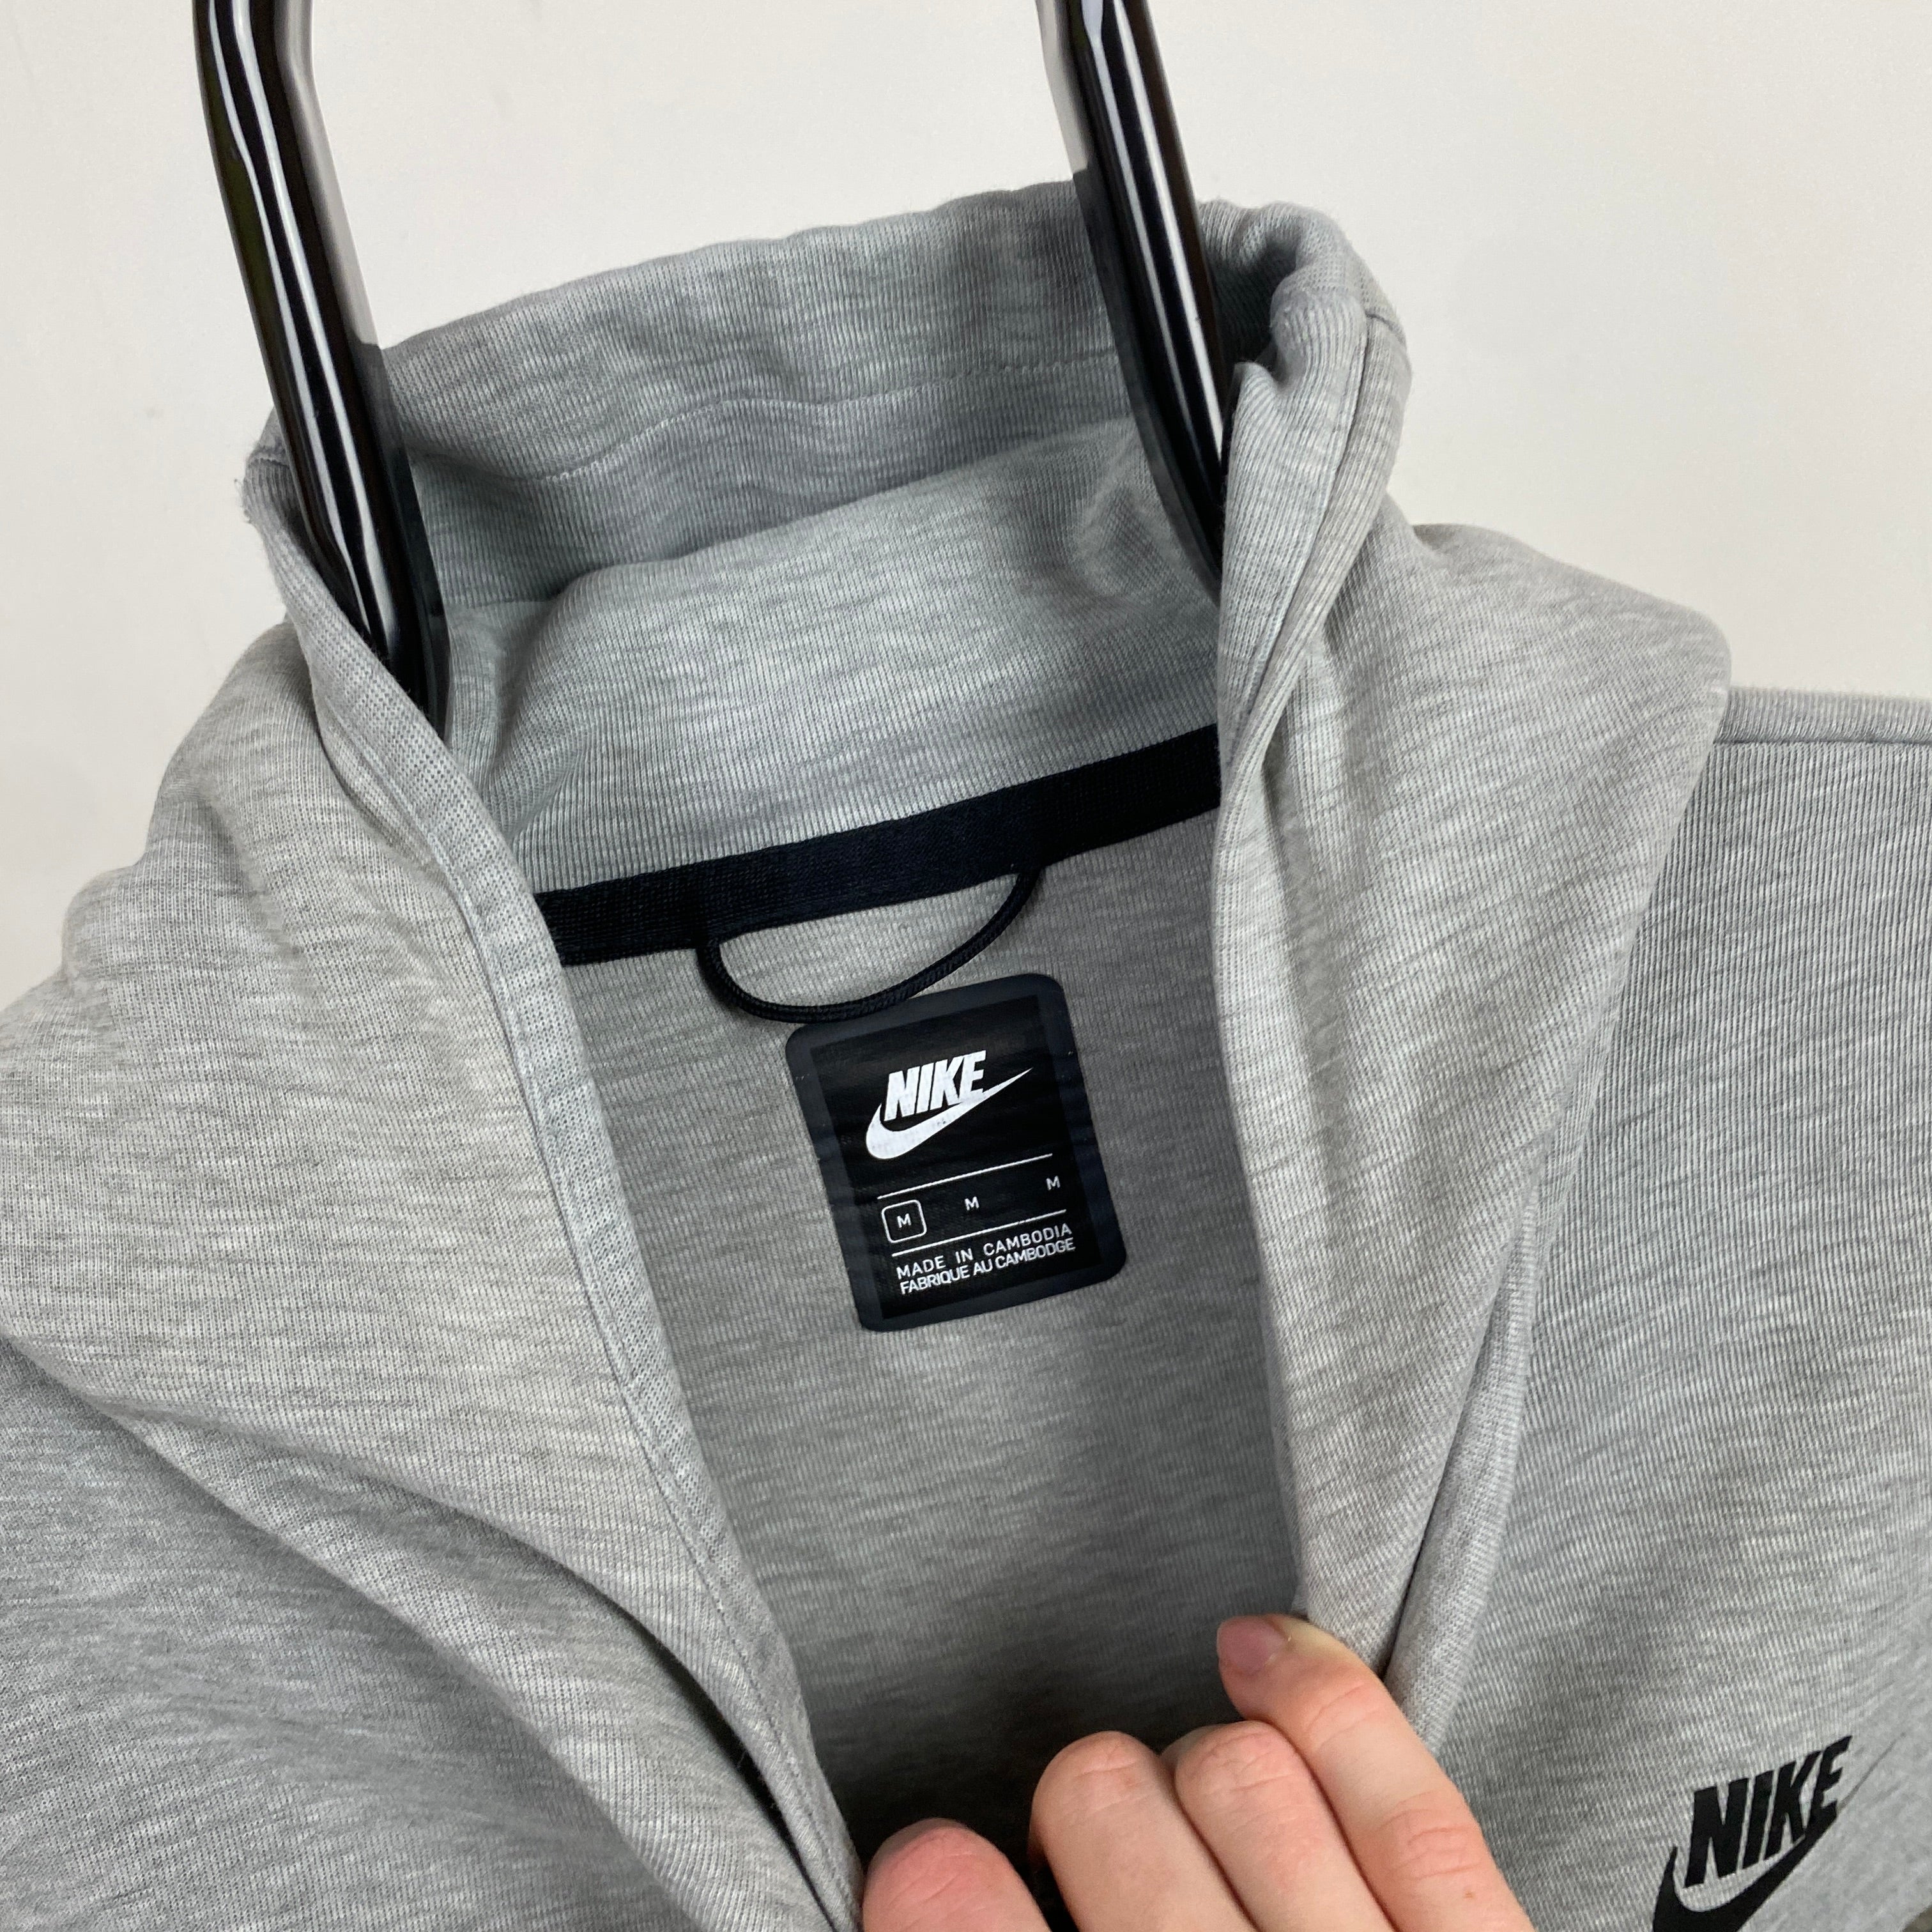 00s Nike Tech Fleece Hoodie Grey Medium